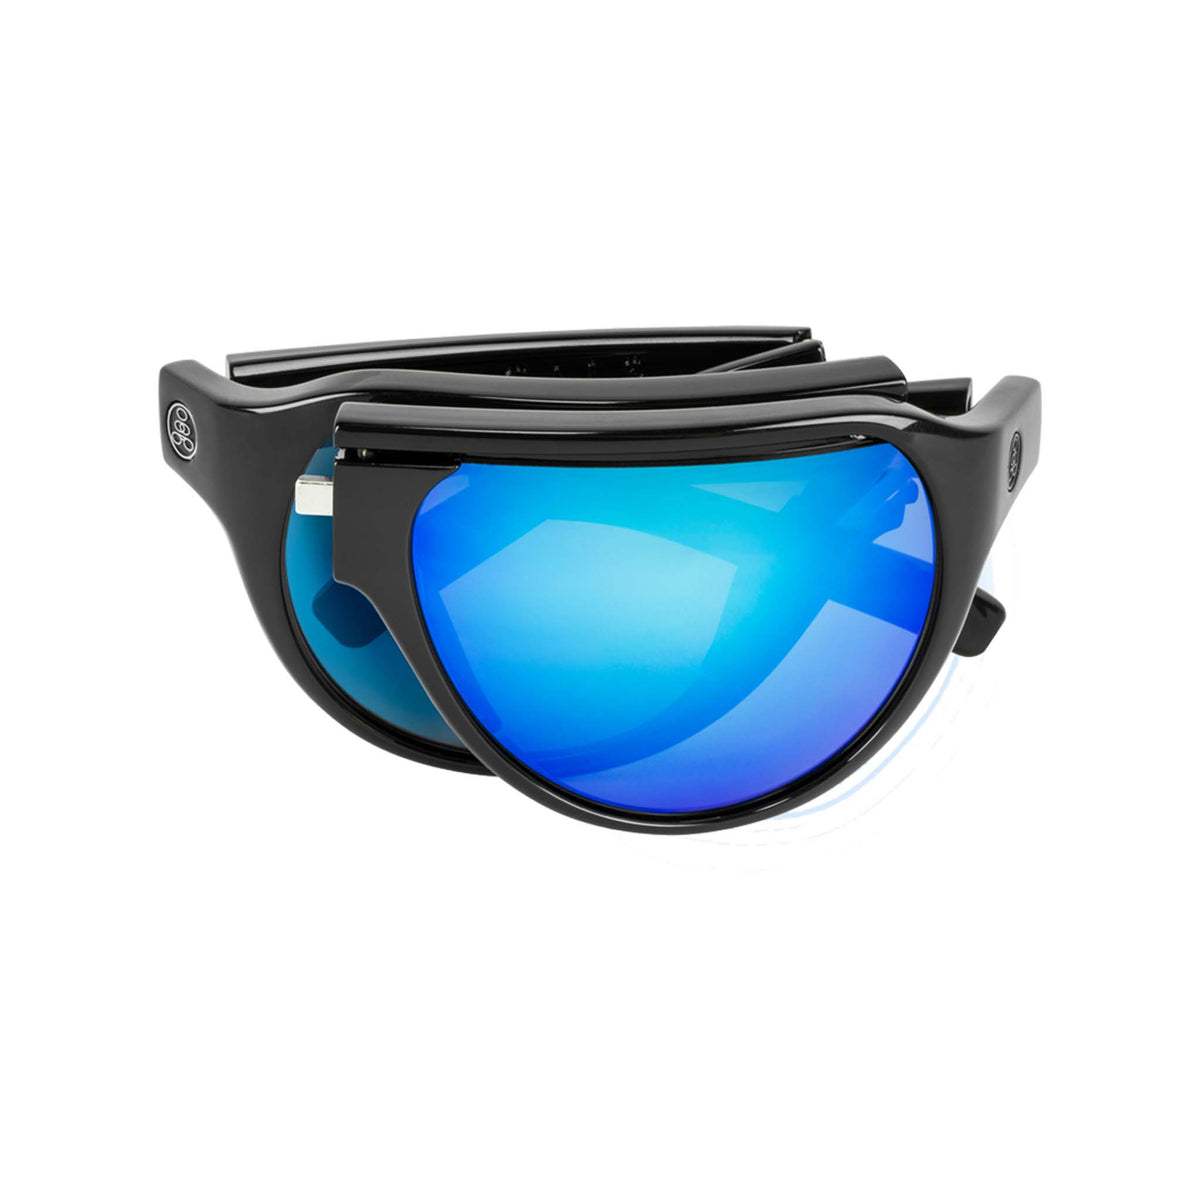 Popticals, Premium Compact Sunglasses, PopAir, 300010-BGUN, Polarized Sunglasses, Gloss Black Frame, Gray Lenses with Blue Mirror Finish, Compact View